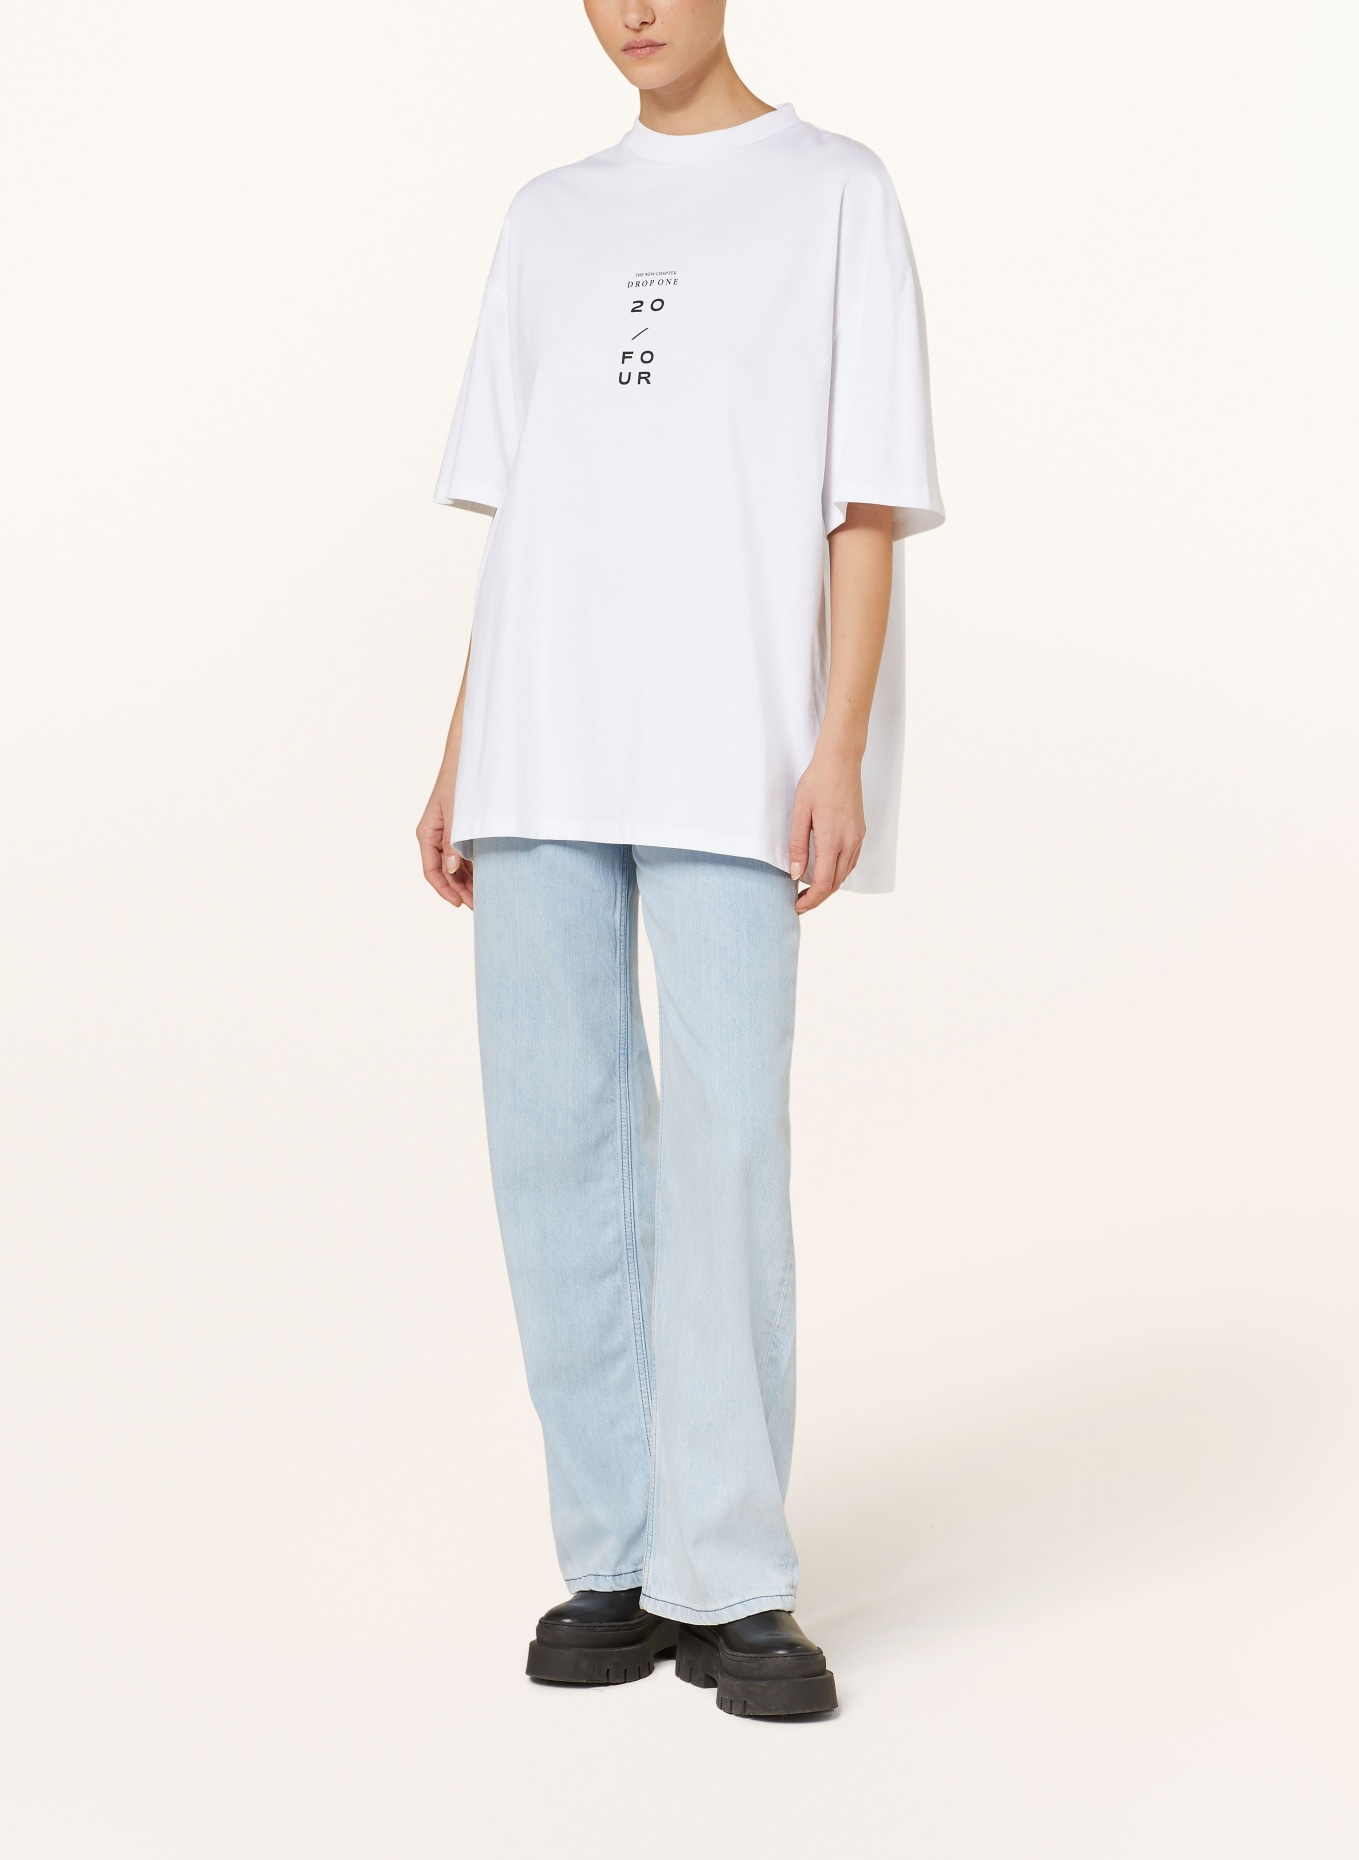 KARO KAUER Oversized-Shirt, Farbe: WEISS (Bild 2)